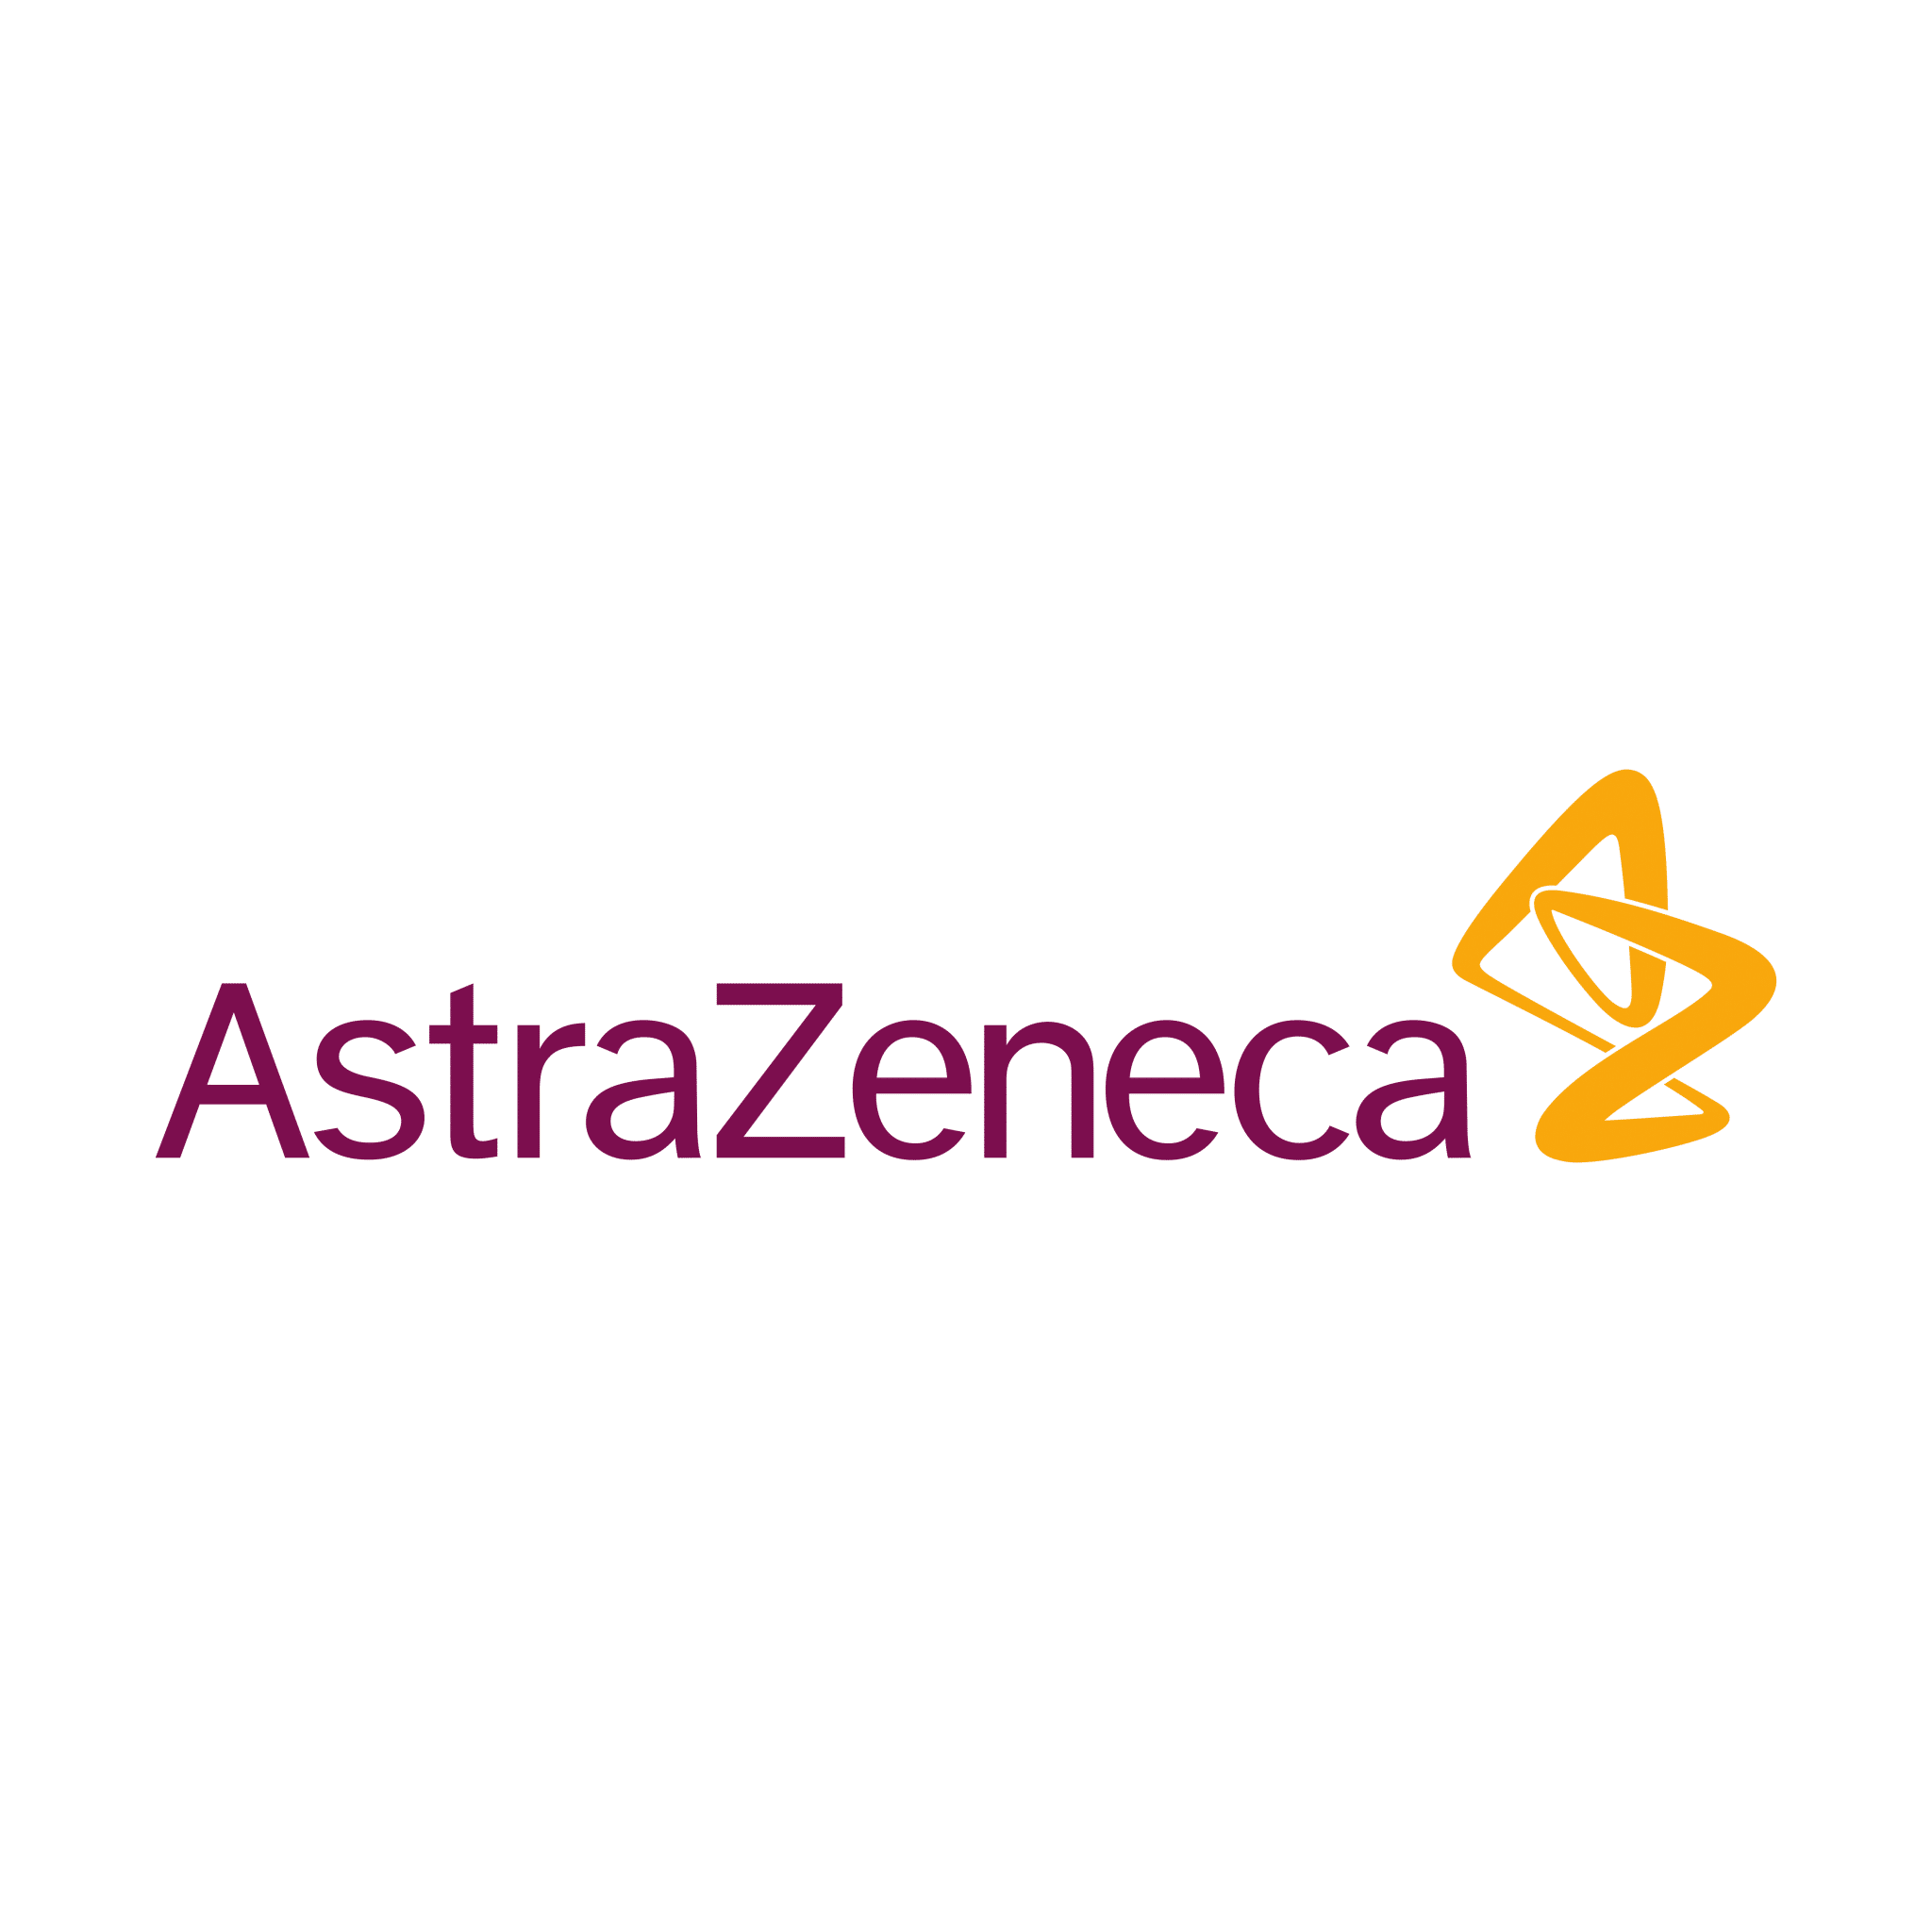 astrazeneca-logo-1